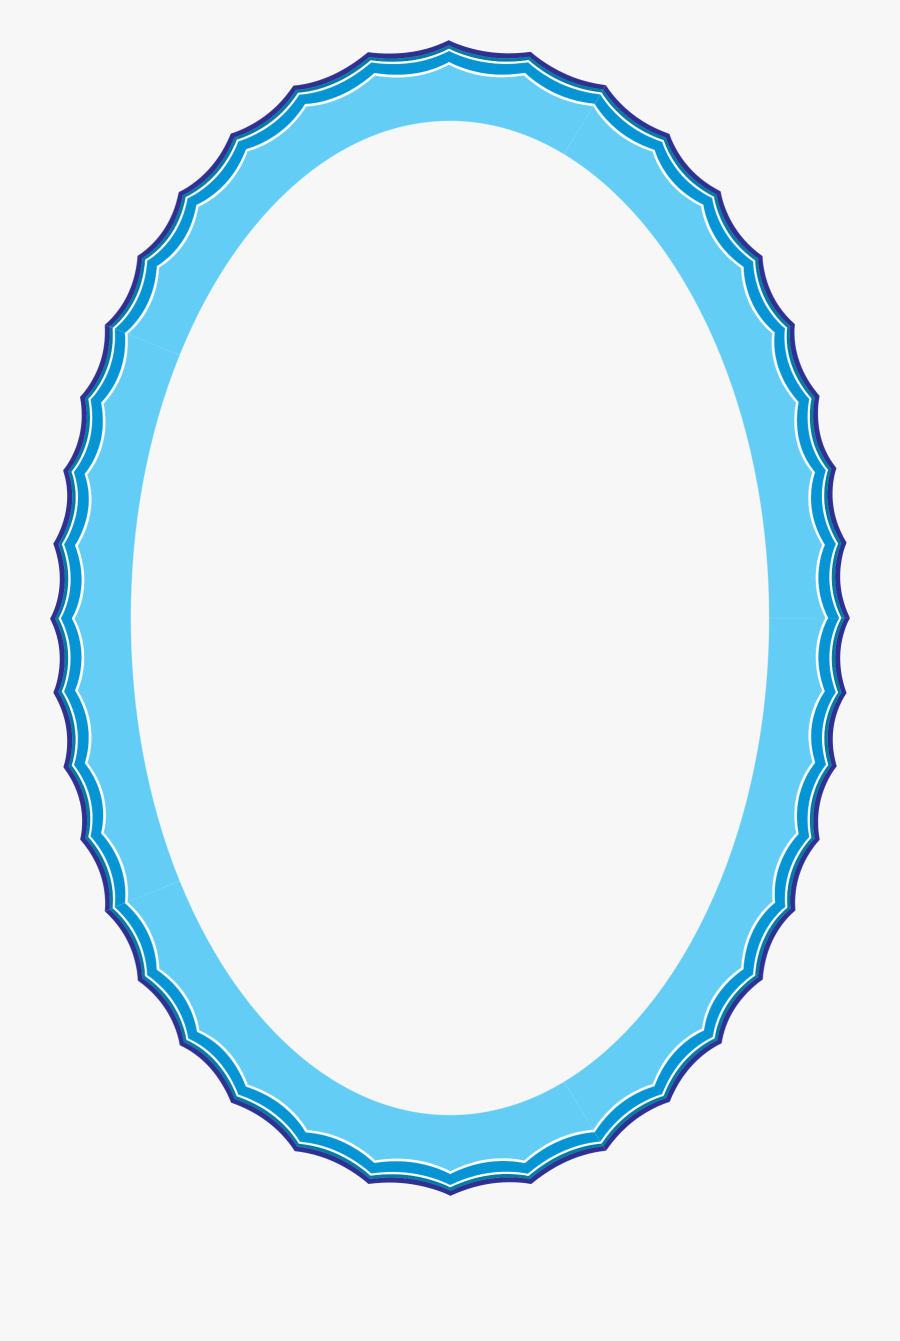 Clipart - Circle, Transparent Clipart